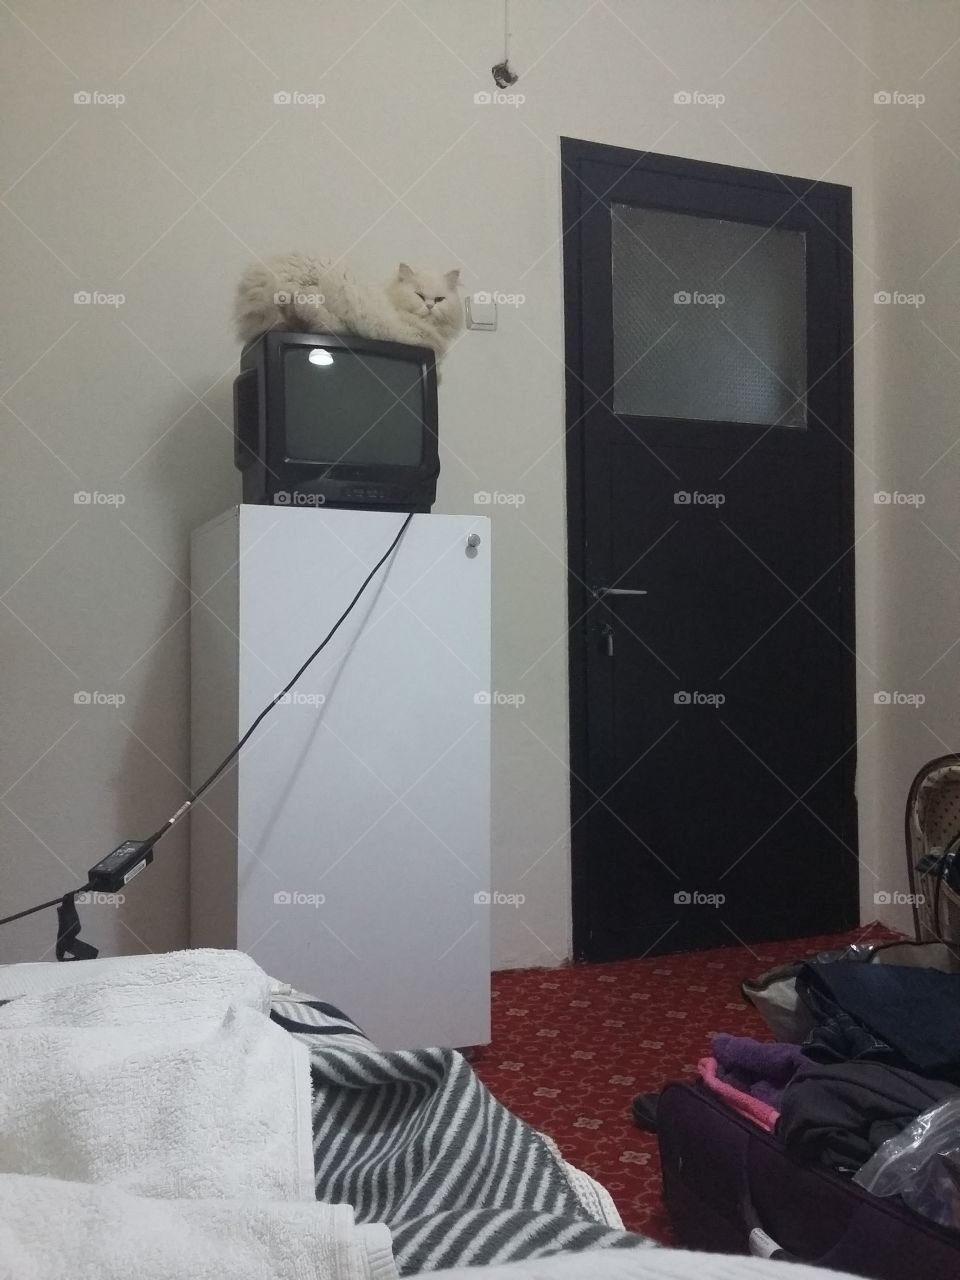 Cat on top of TV